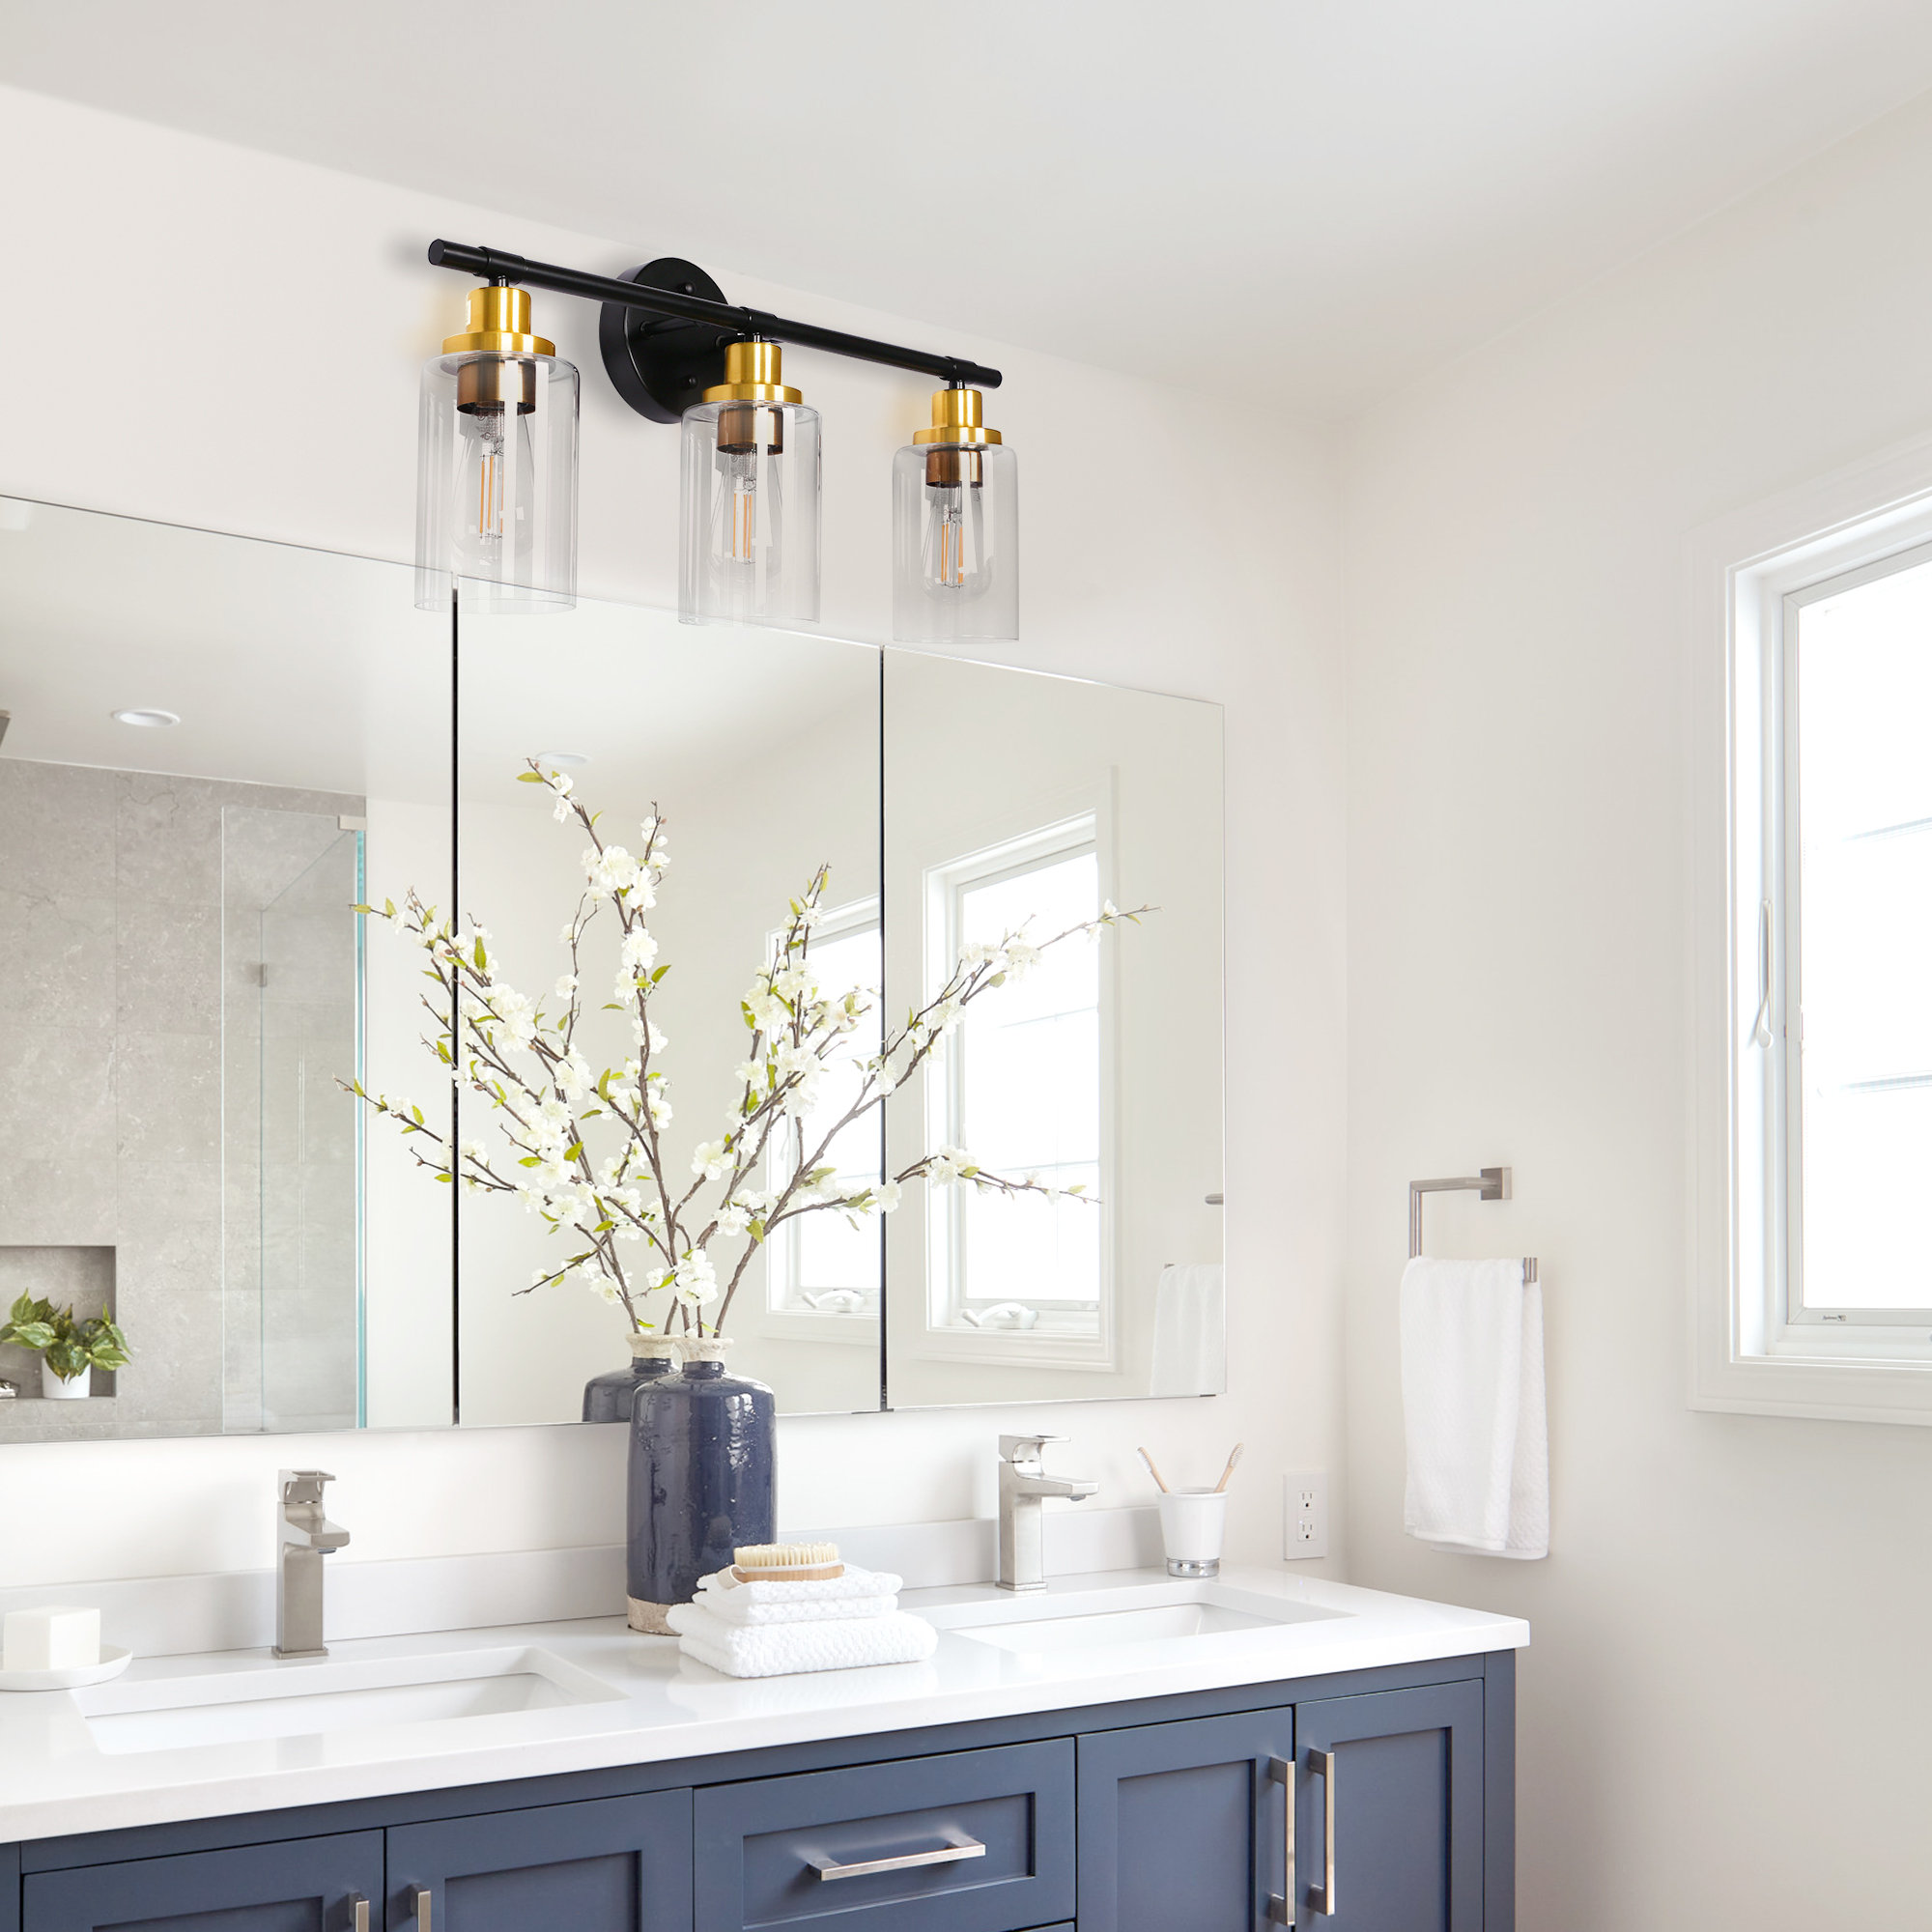 22 in. 3-Light Modern Black Bathroom Vanity Light Farmhouse Wall Sconce  with Clear Glass Globe Shades